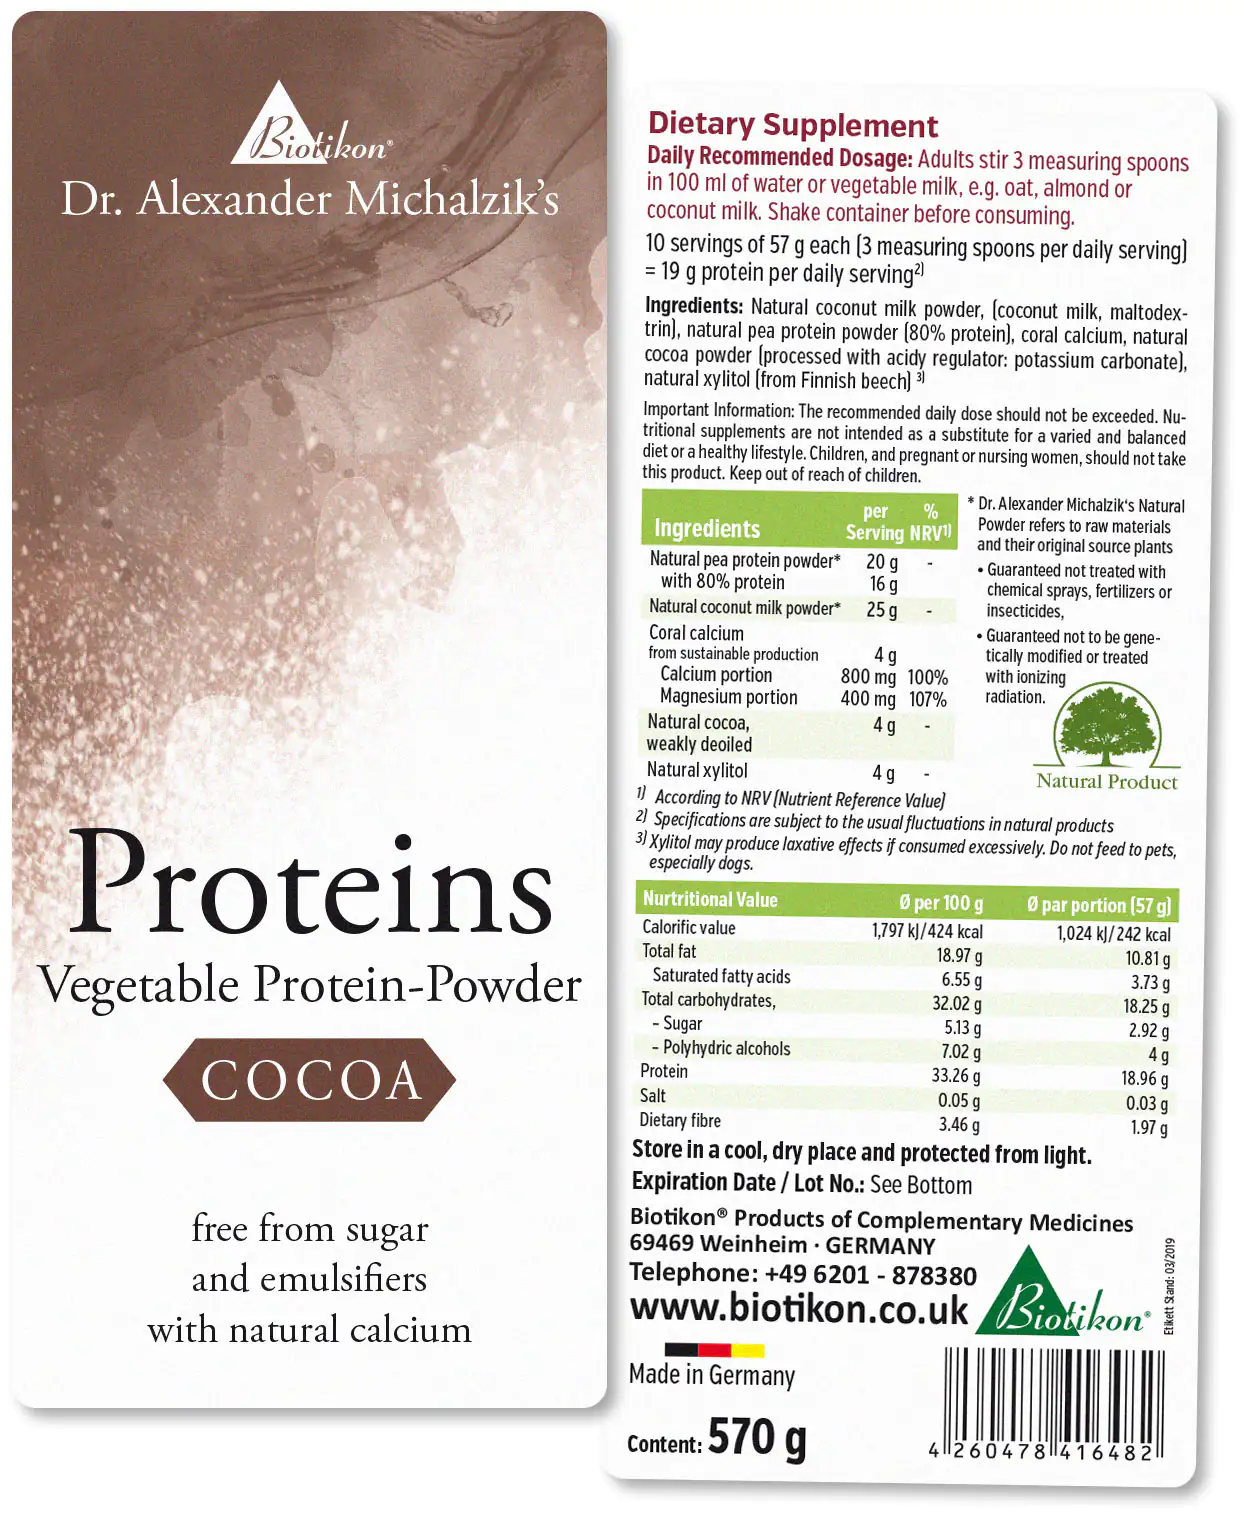 Proteine - 2er-Pack, Kakao + Kokos